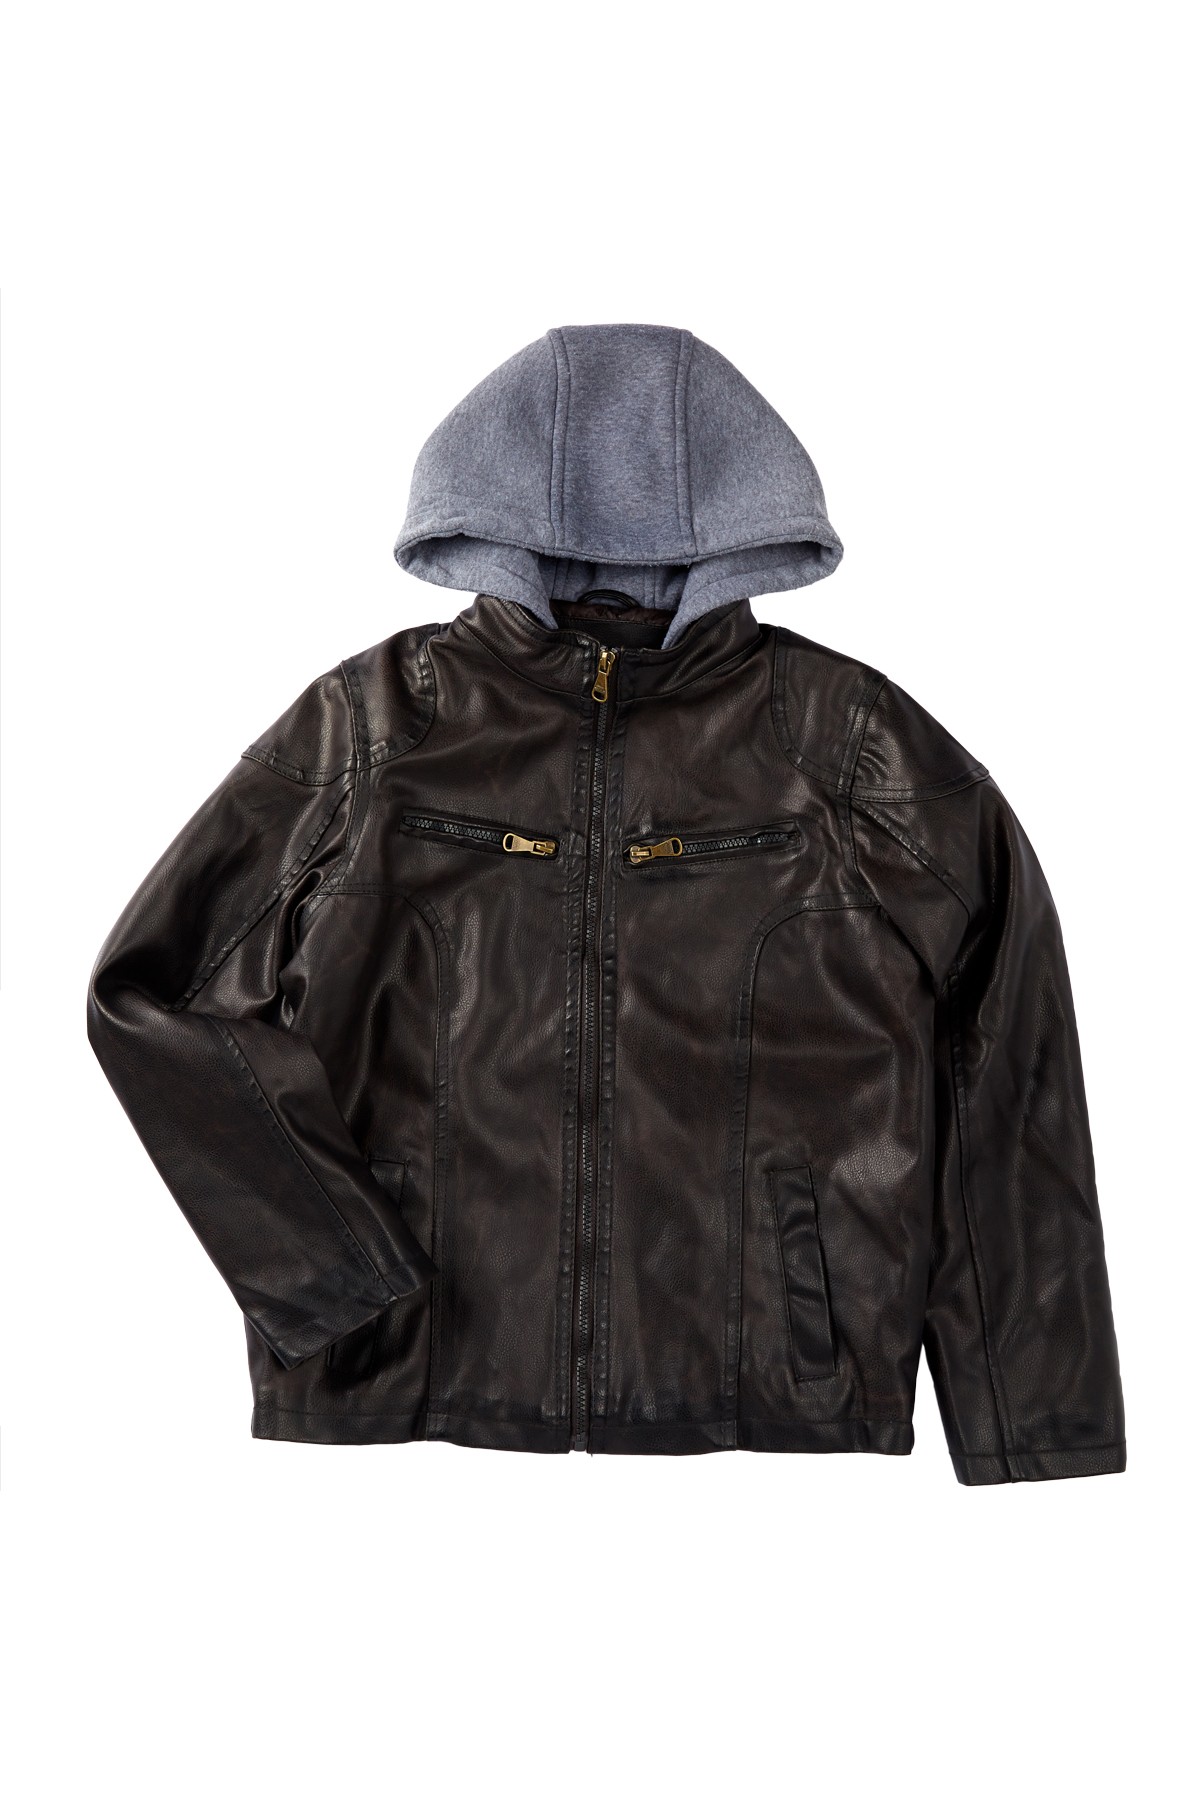 Urban Republic Boys' Hooded Faux Leather Jacket